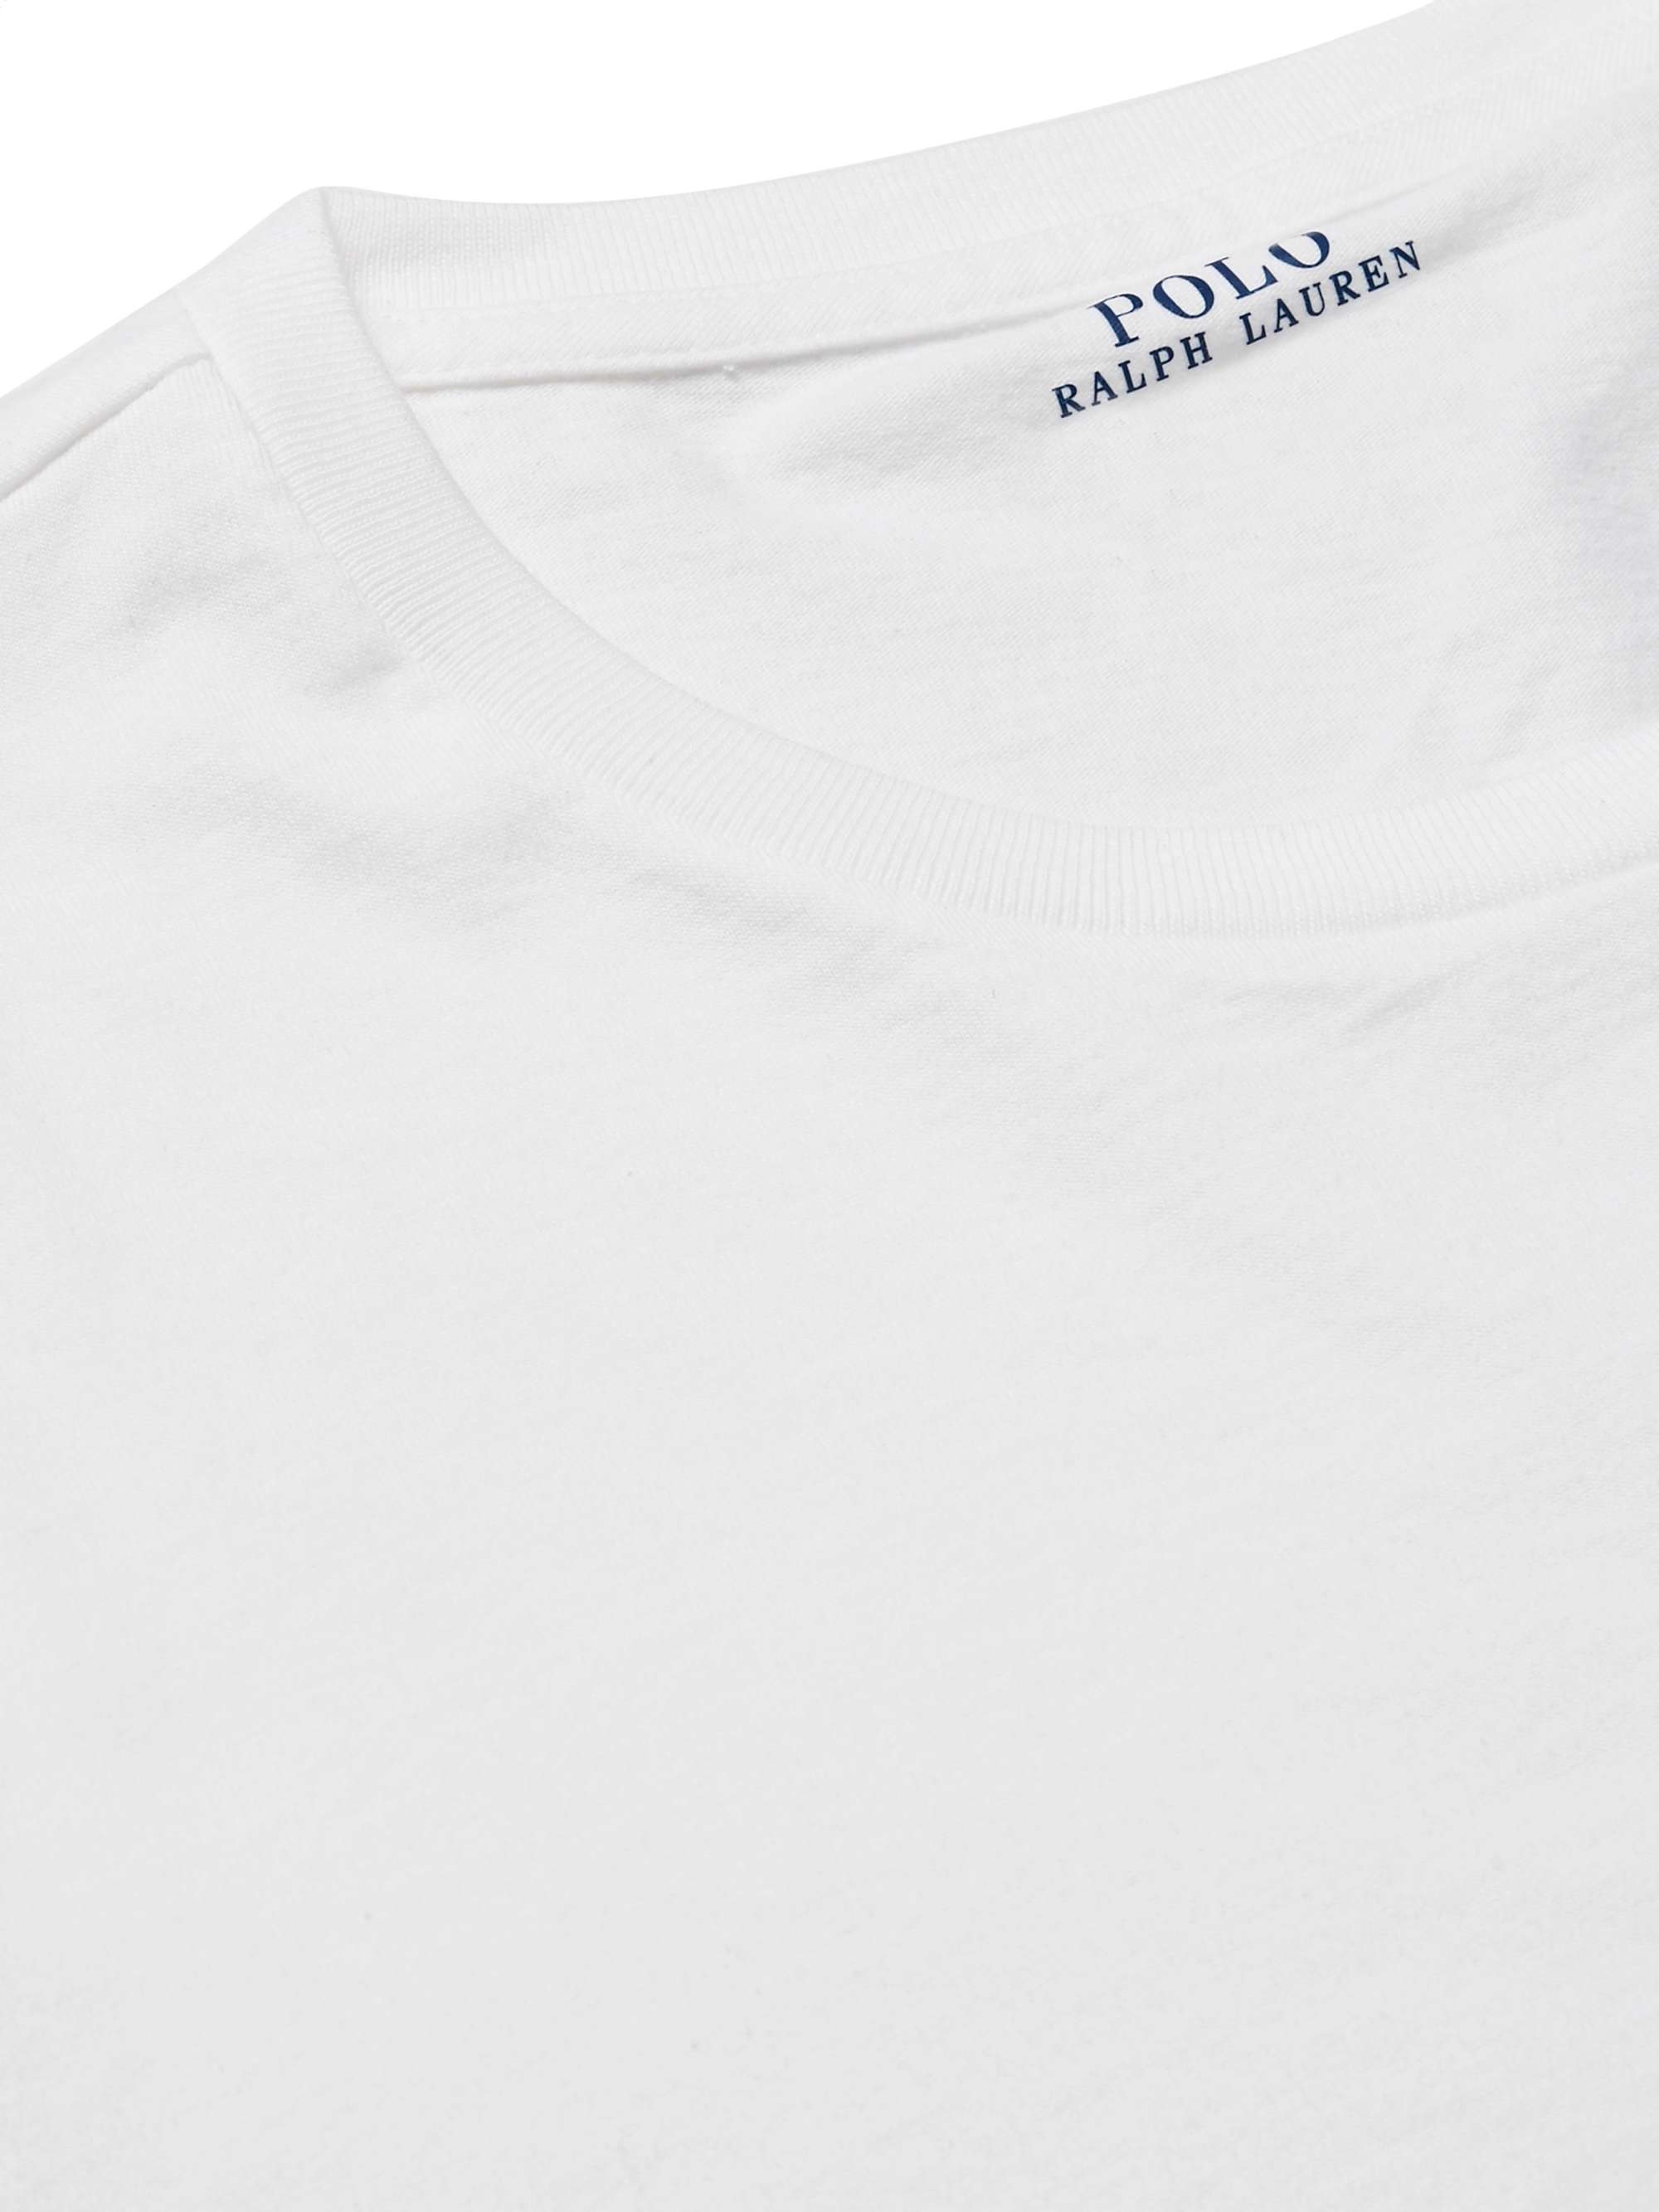 White Slim-Fit Cotton-Jersey T-Shirt | POLO RALPH LAUREN | MR PORTER